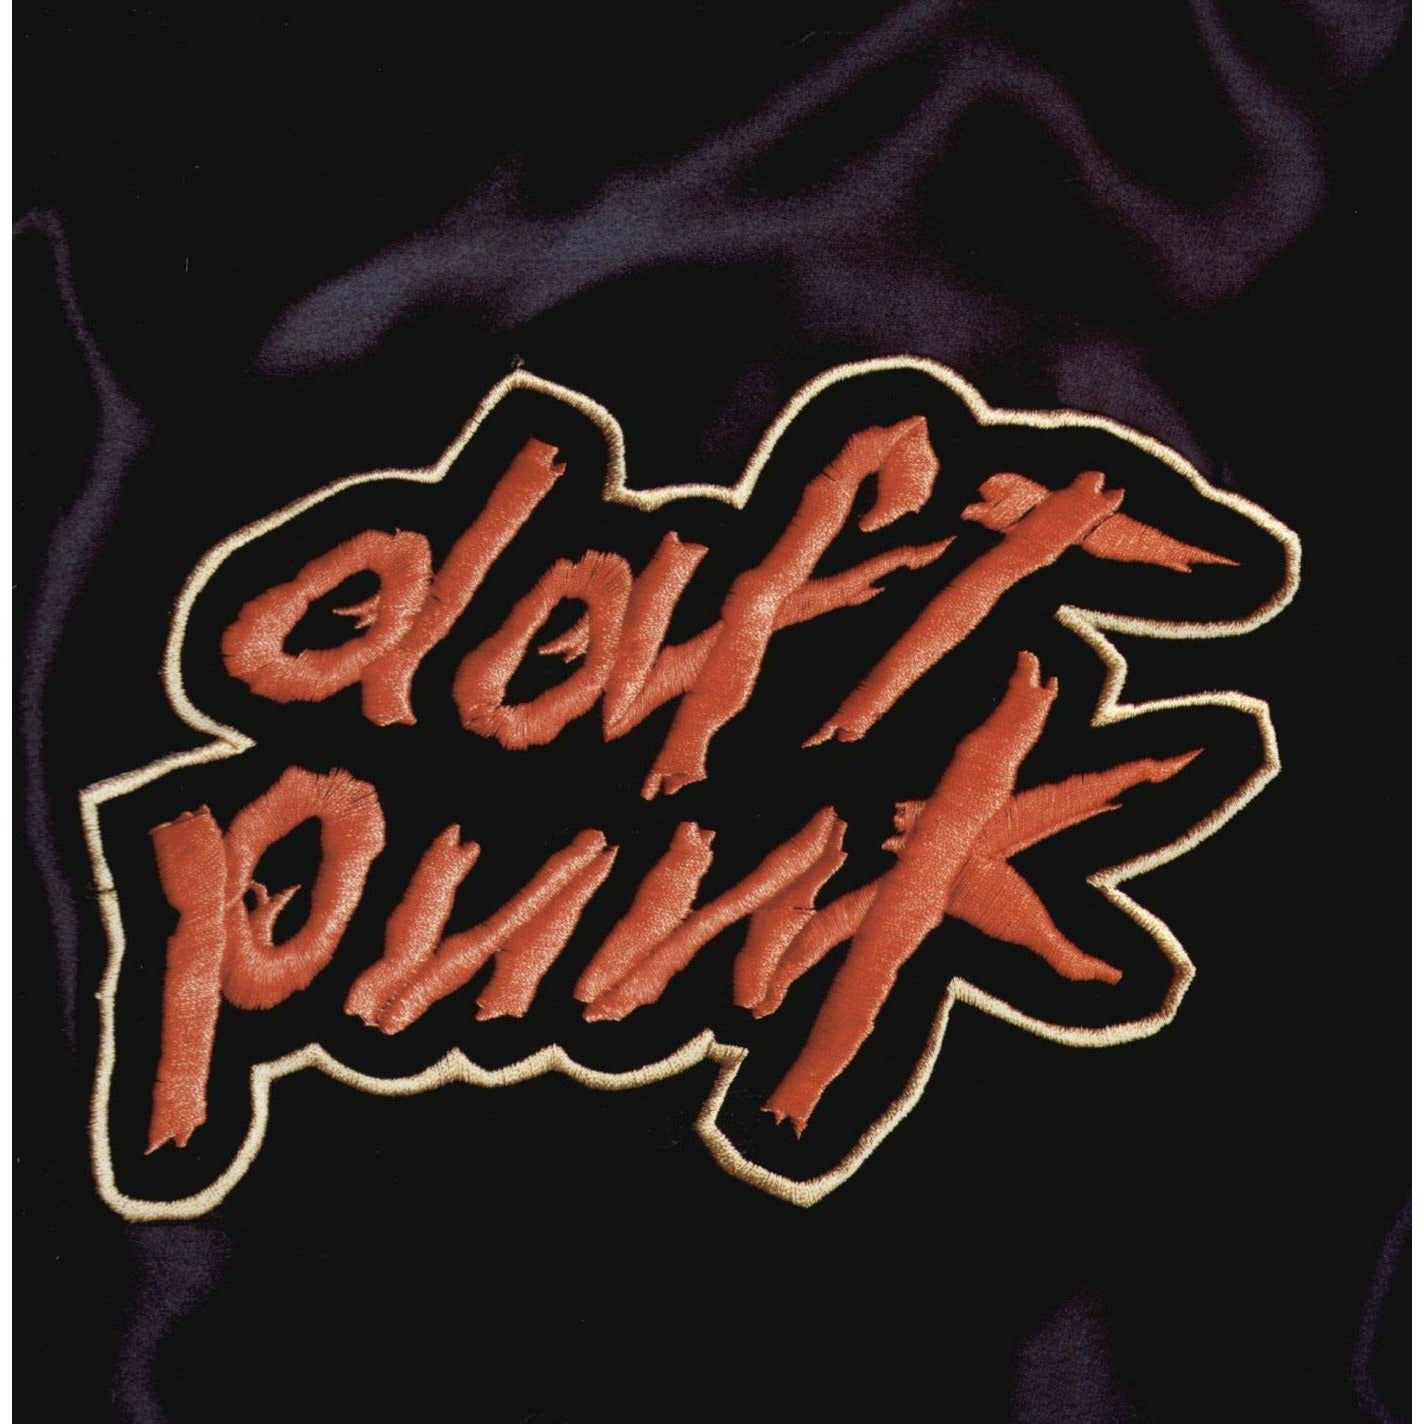 daft punk album homework vinyl